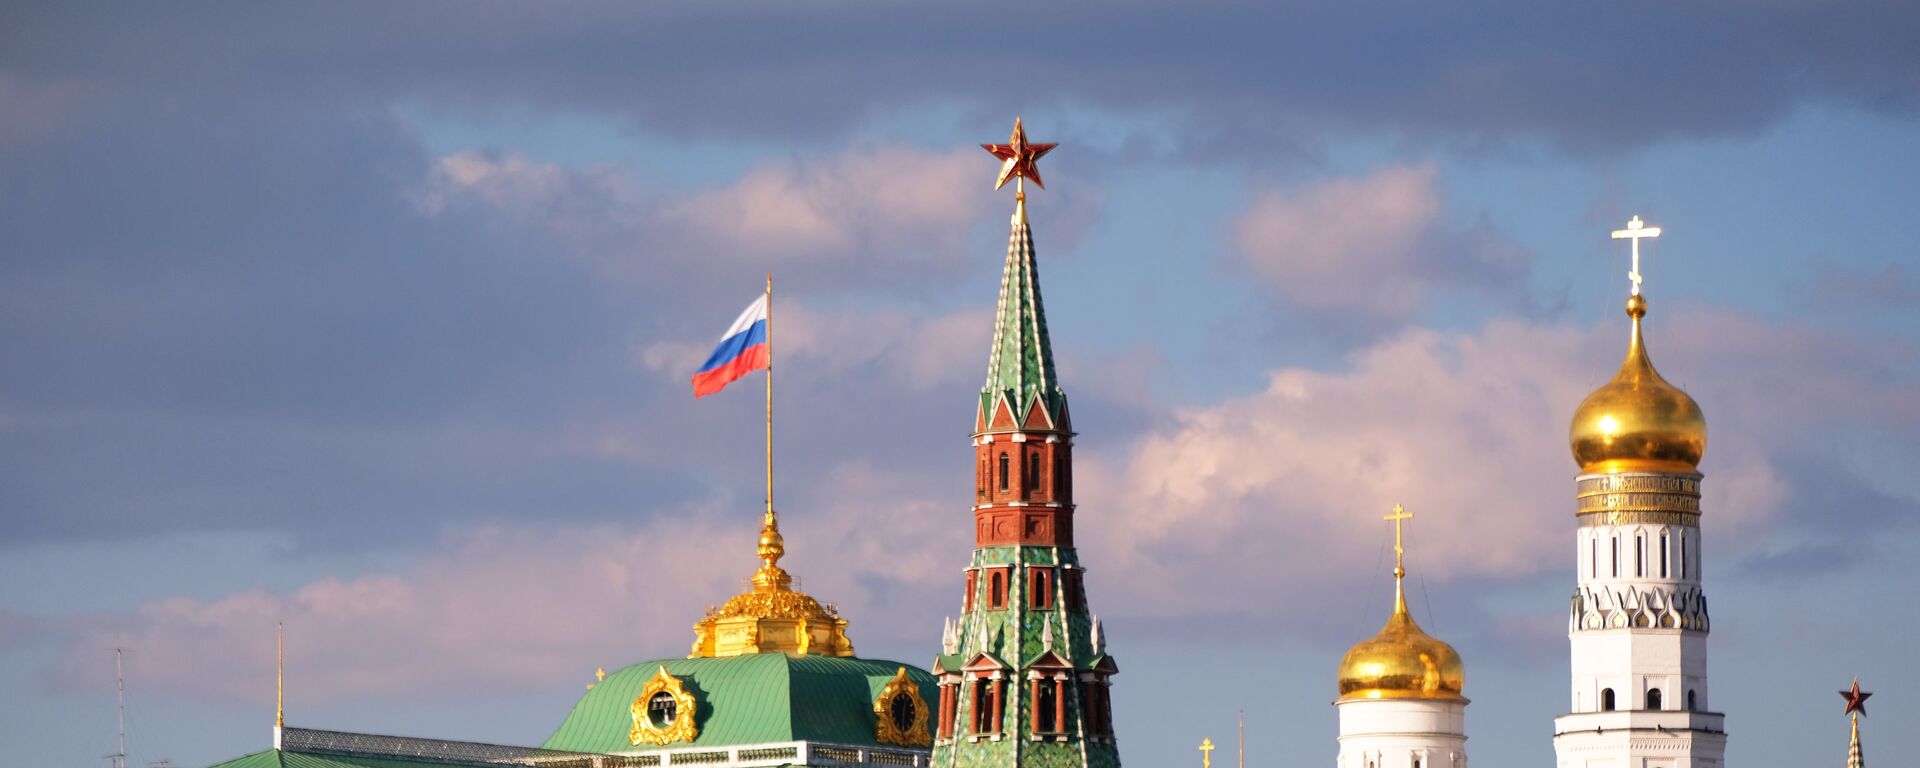 El Kremlin de Moscú - Sputnik Mundo, 1920, 27.10.2021